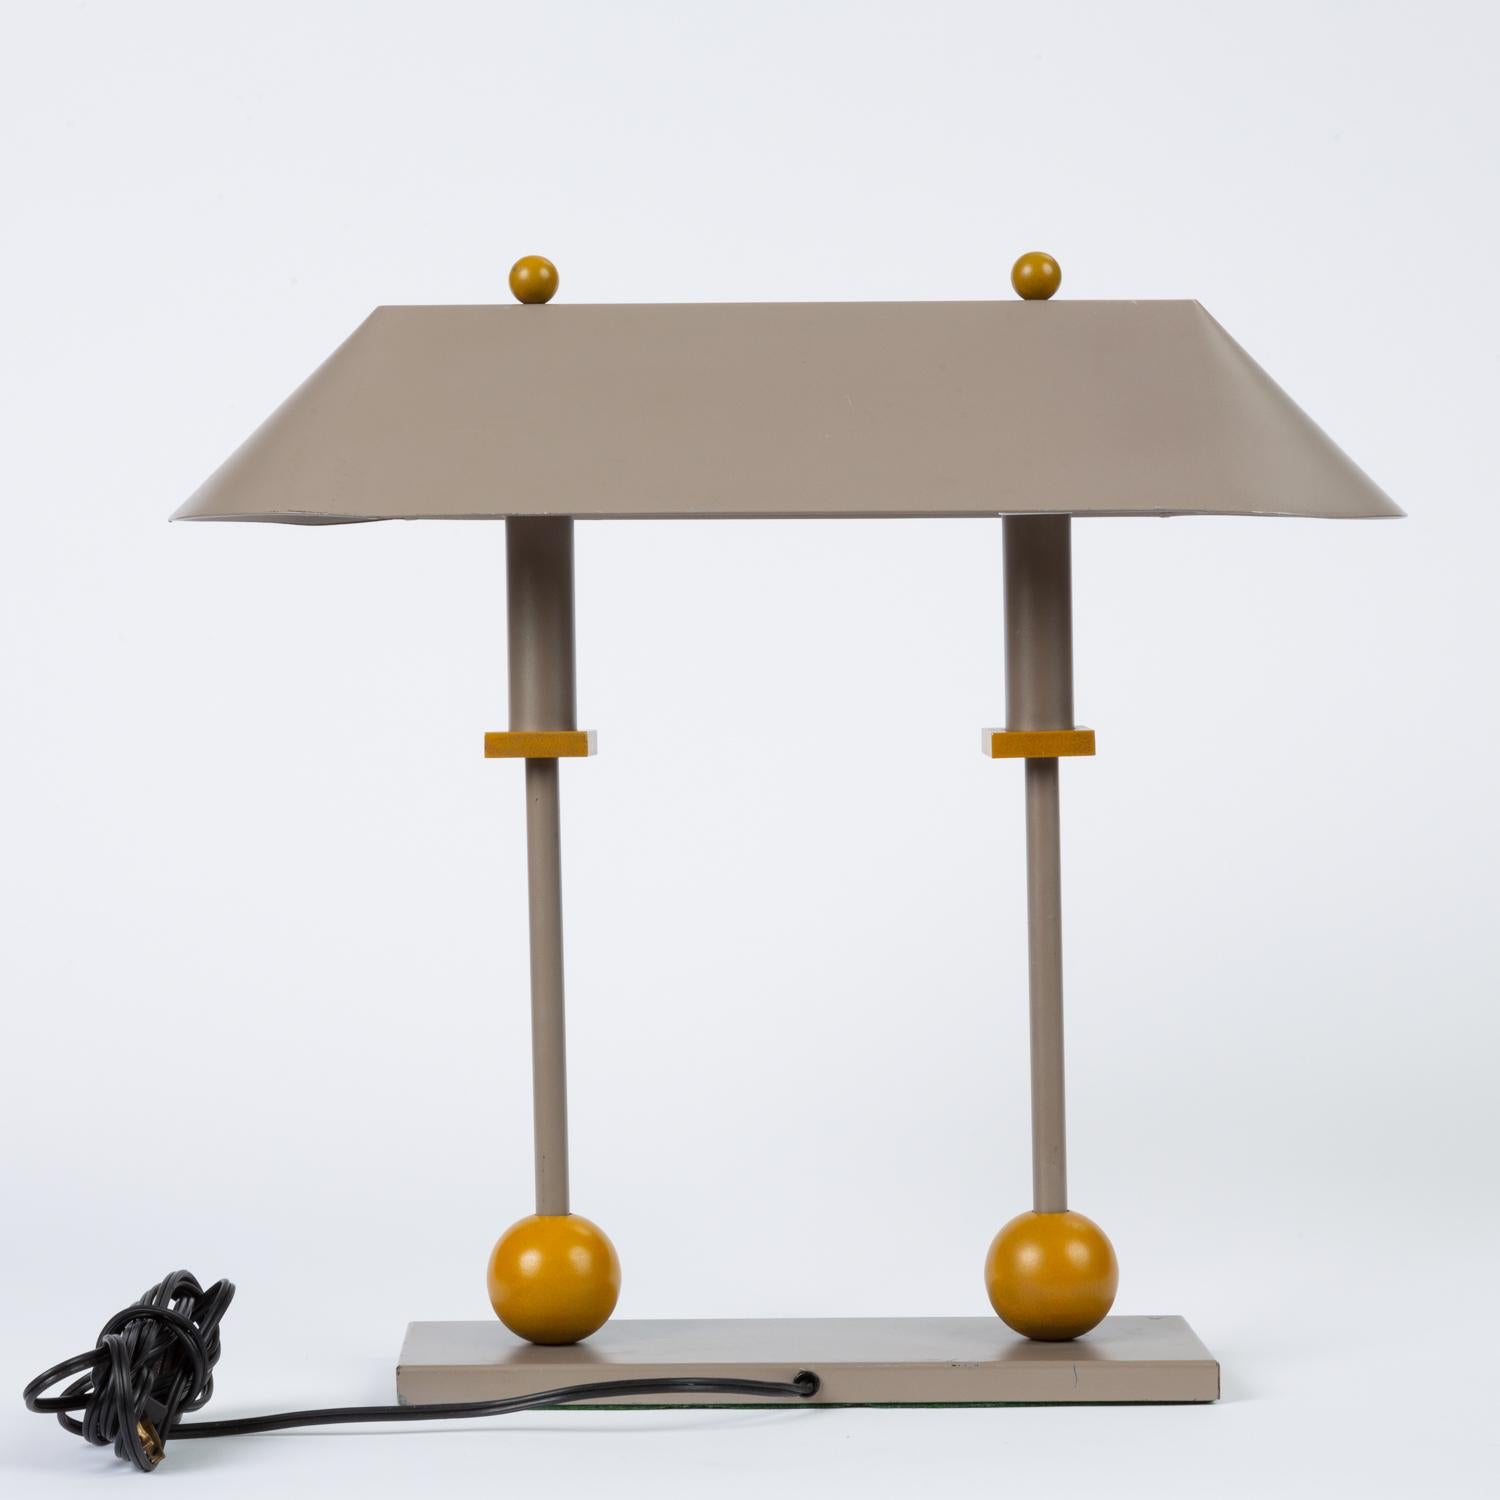 Enameled 1990s Postmodern Desk or Table Lamp by Robert Sonneman for George Kovacs